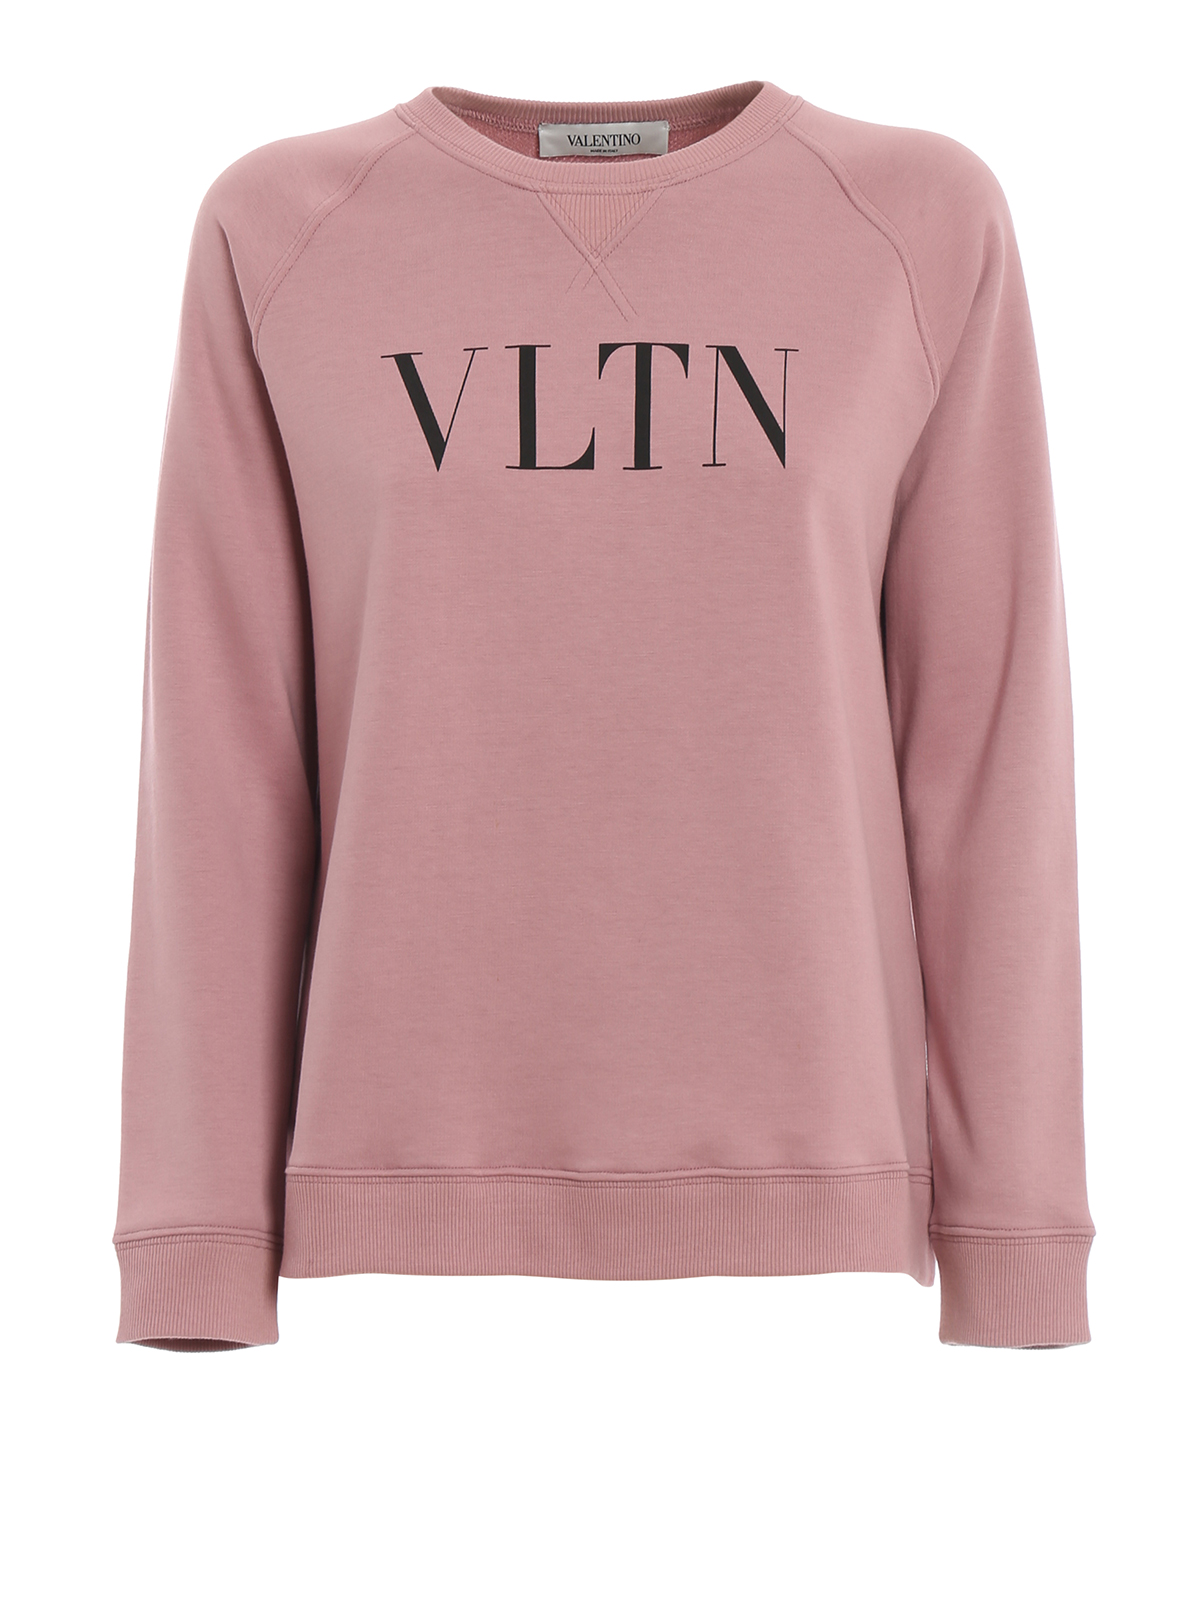 Sweatshirts & Sweaters Valentino - VLTN print pink crewneck 